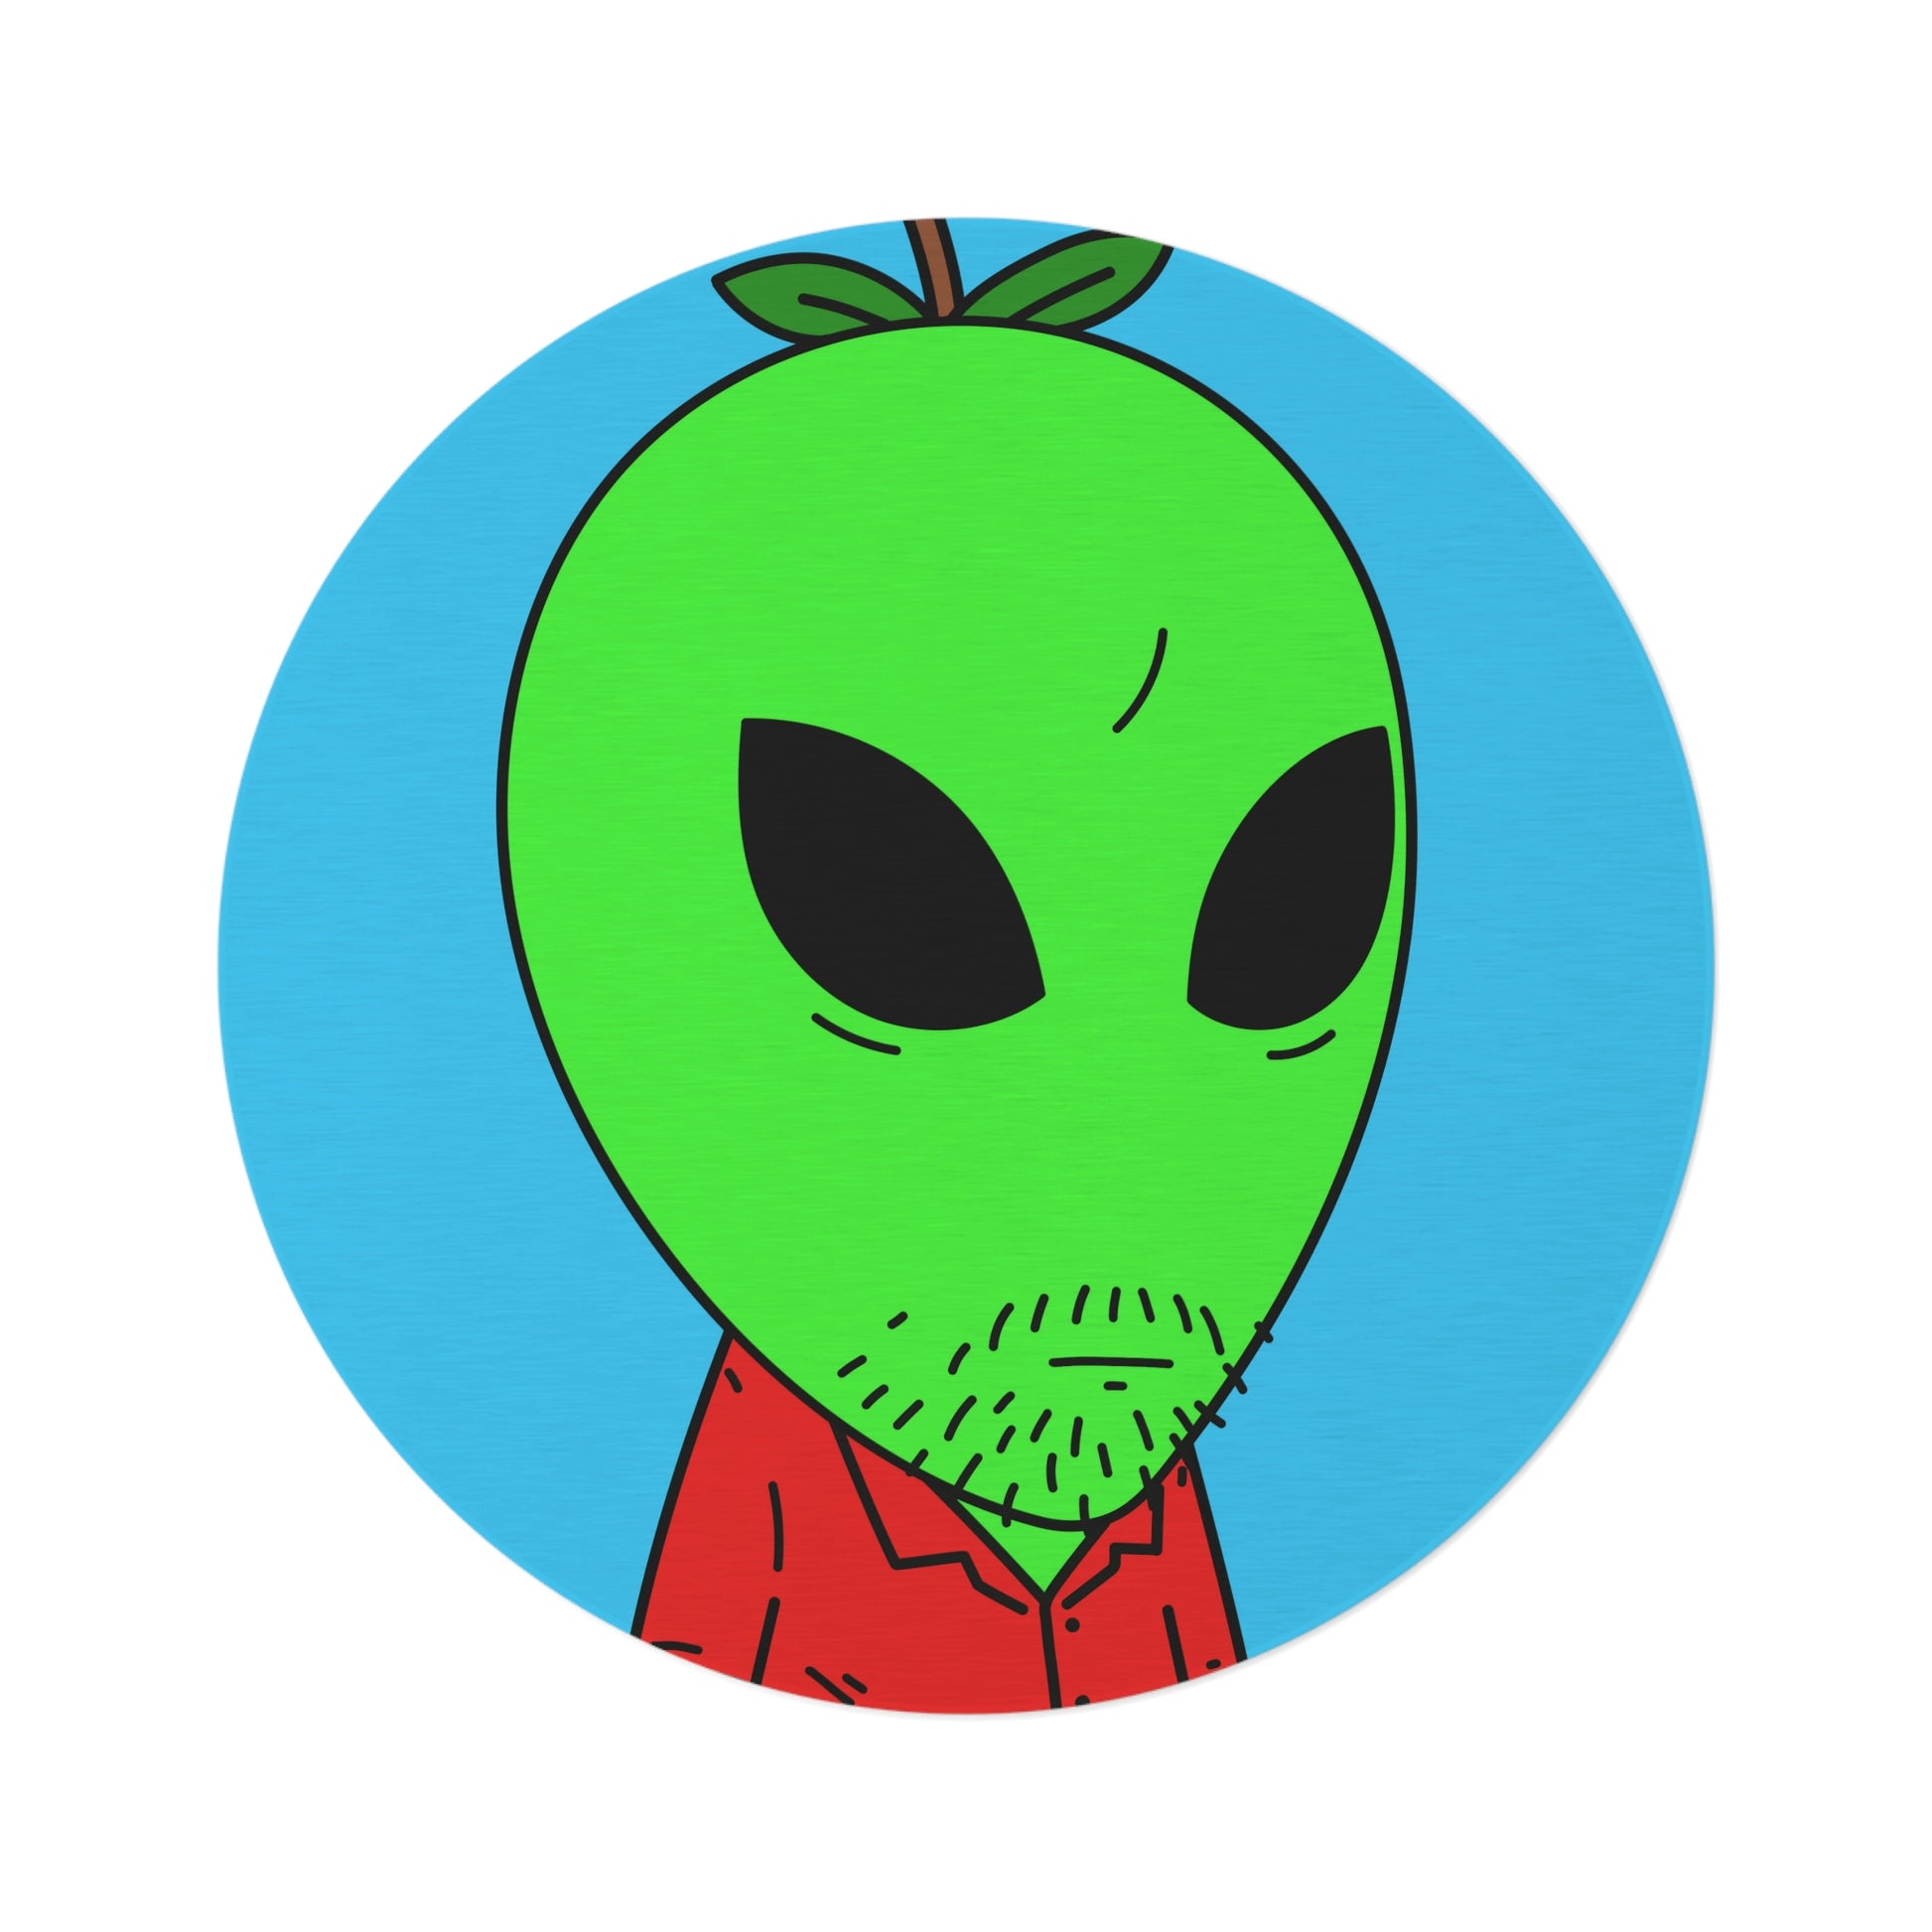 Green Apple Head Alien Unshaven Red Collar Shirt Visitor Round Rug - Visitor751